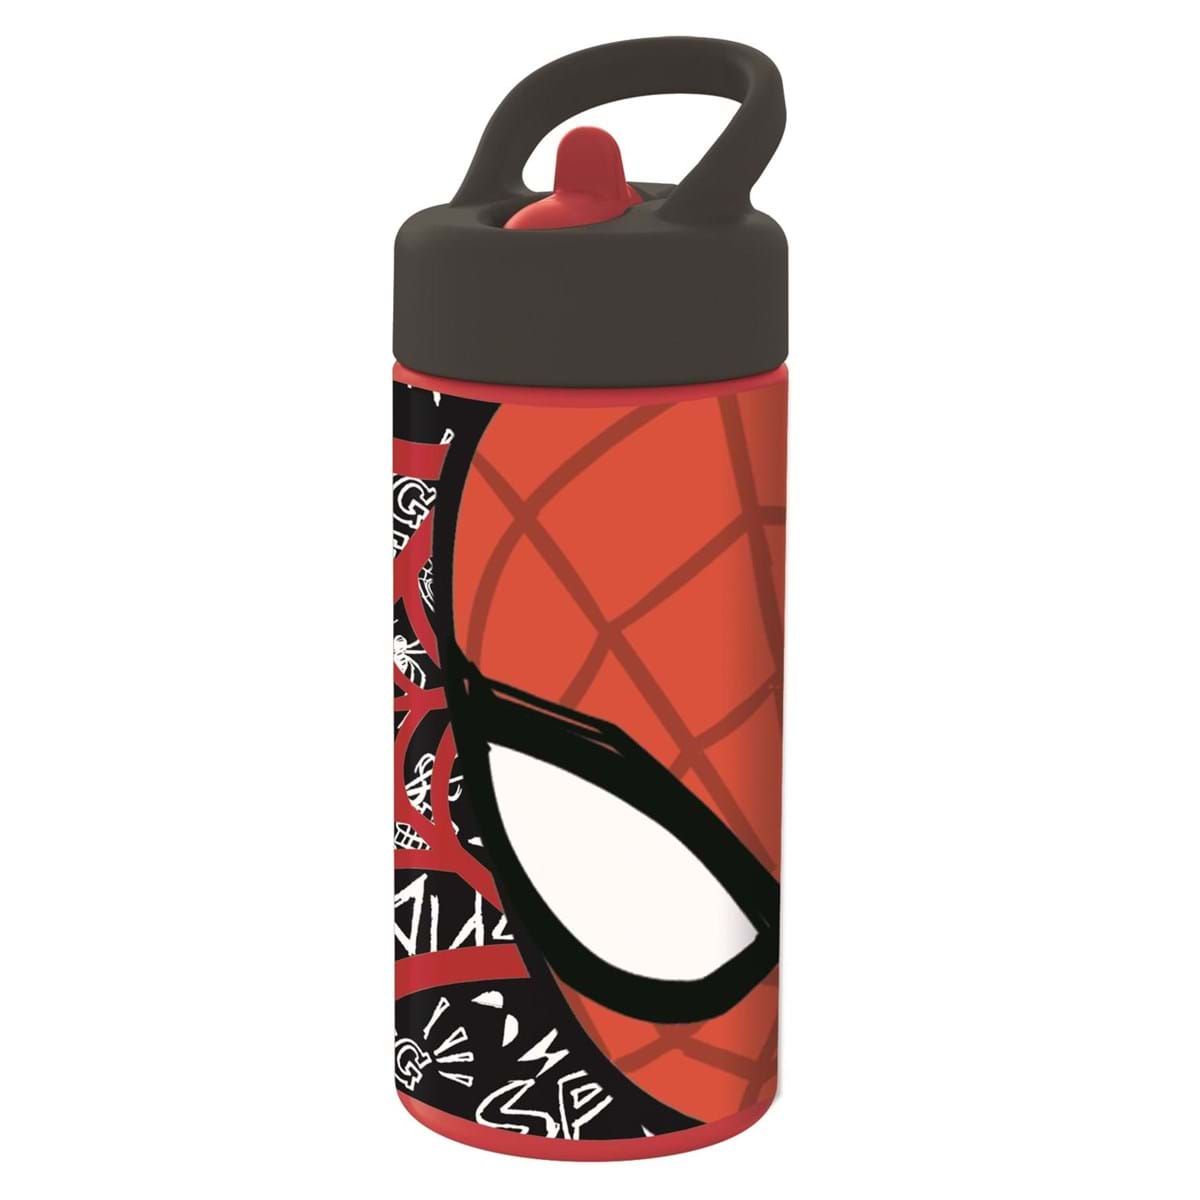 Euromic - Spiderman sipper water bottle (088808718-44101)